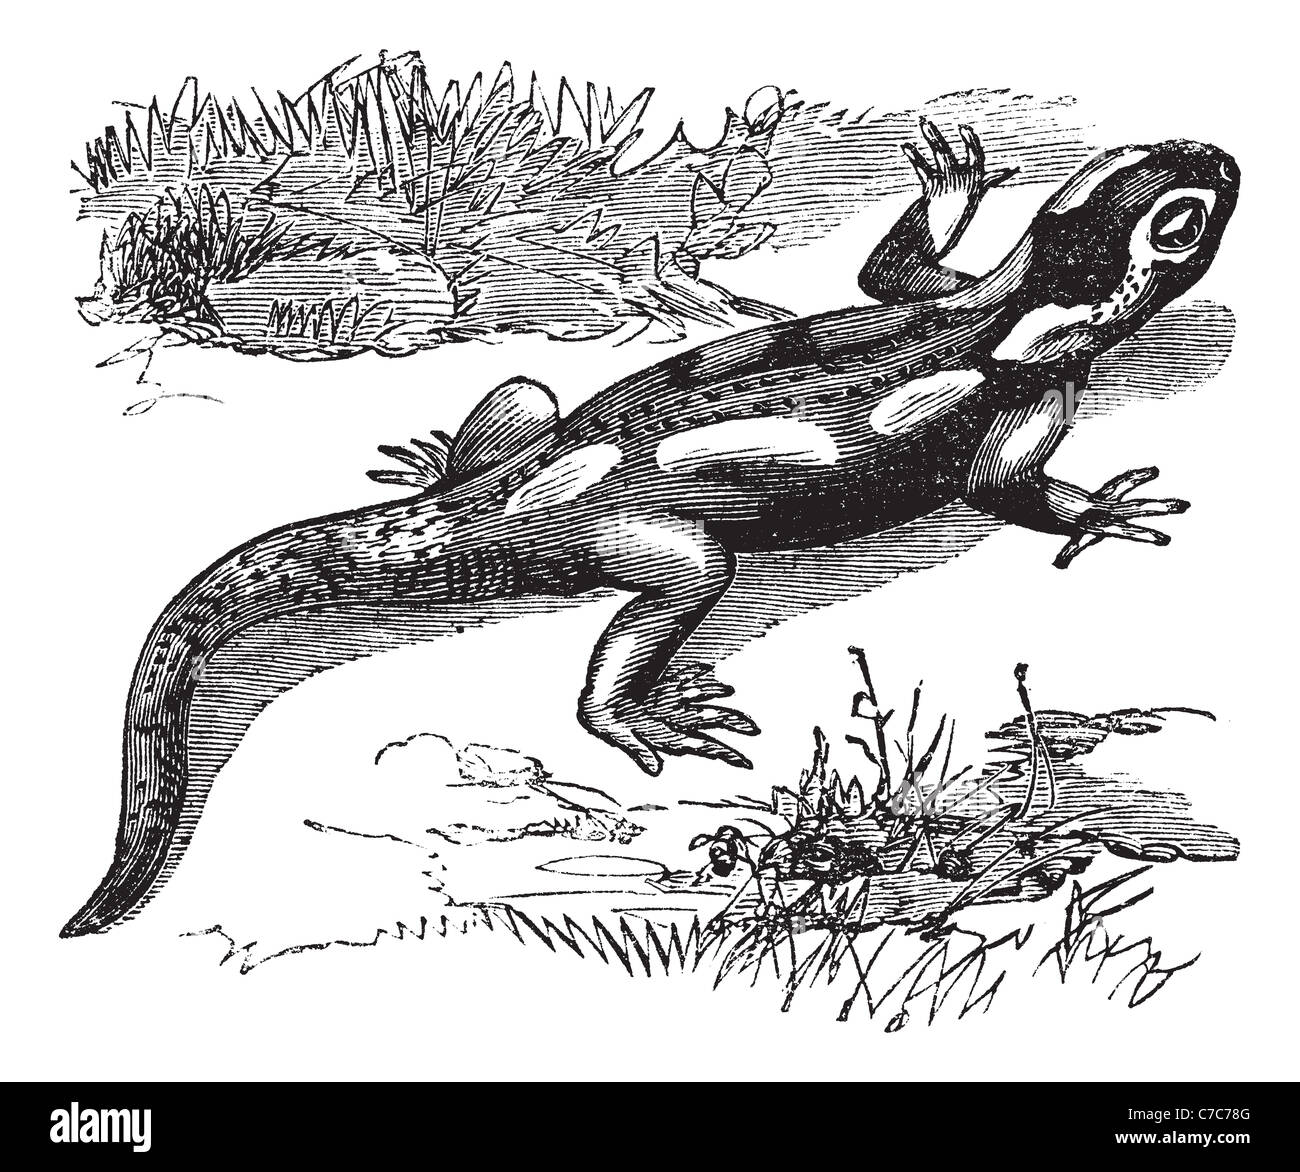 Spotted Salamander Vintage Gravur. Alte eingraviert Darstellung der Spotted Salamander in der Wiese. Stockfoto